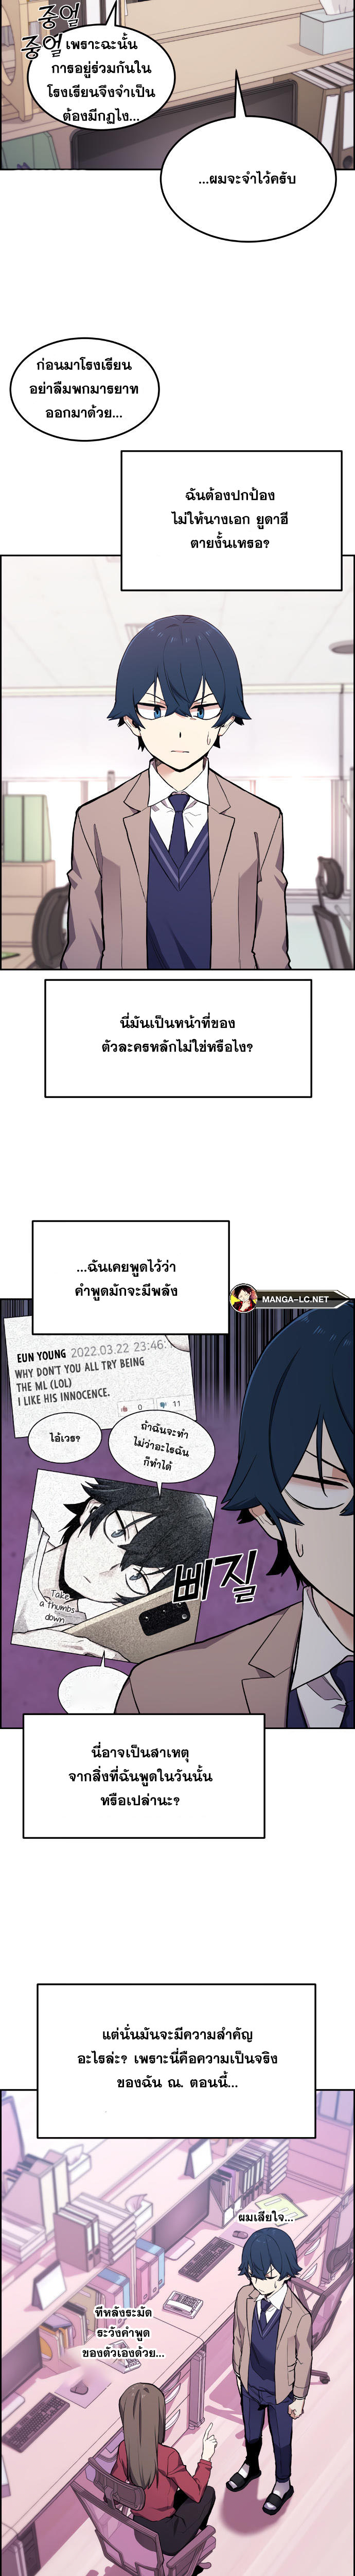 Webtoon Character Na Kang Lim ร ยธโ€ขร ยธยญร ยธโขร ยธโ€”ร ยธยตร ยนห 2 (3)